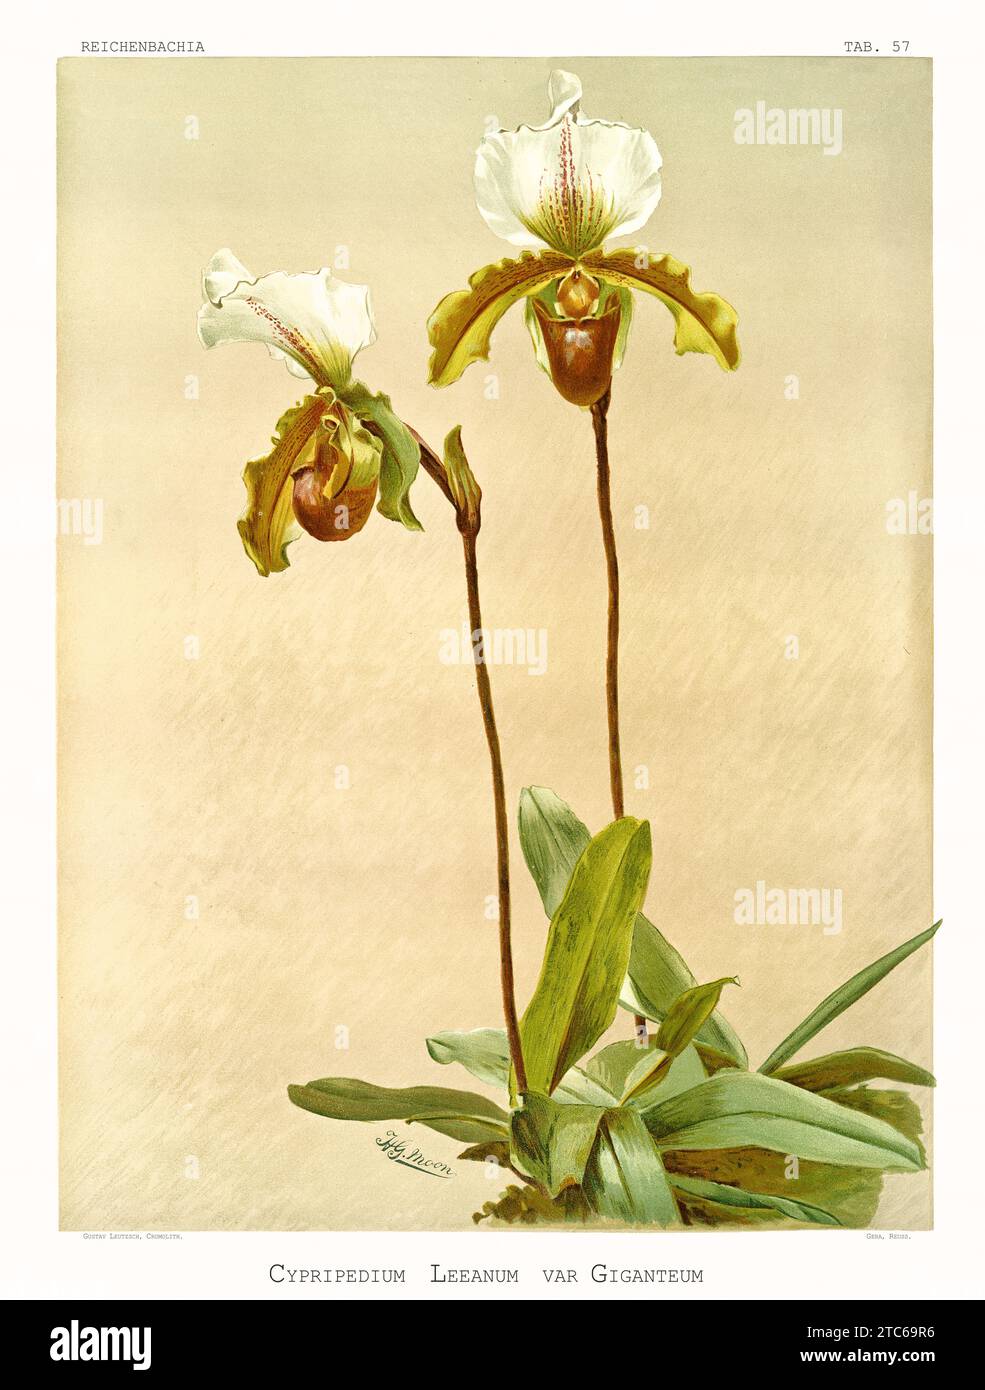 Old illustration of  Cypripedium leeanum. Reichenbachia, by F. Sander. St. Albans, UK, 1888 - 1894 Stock Photo